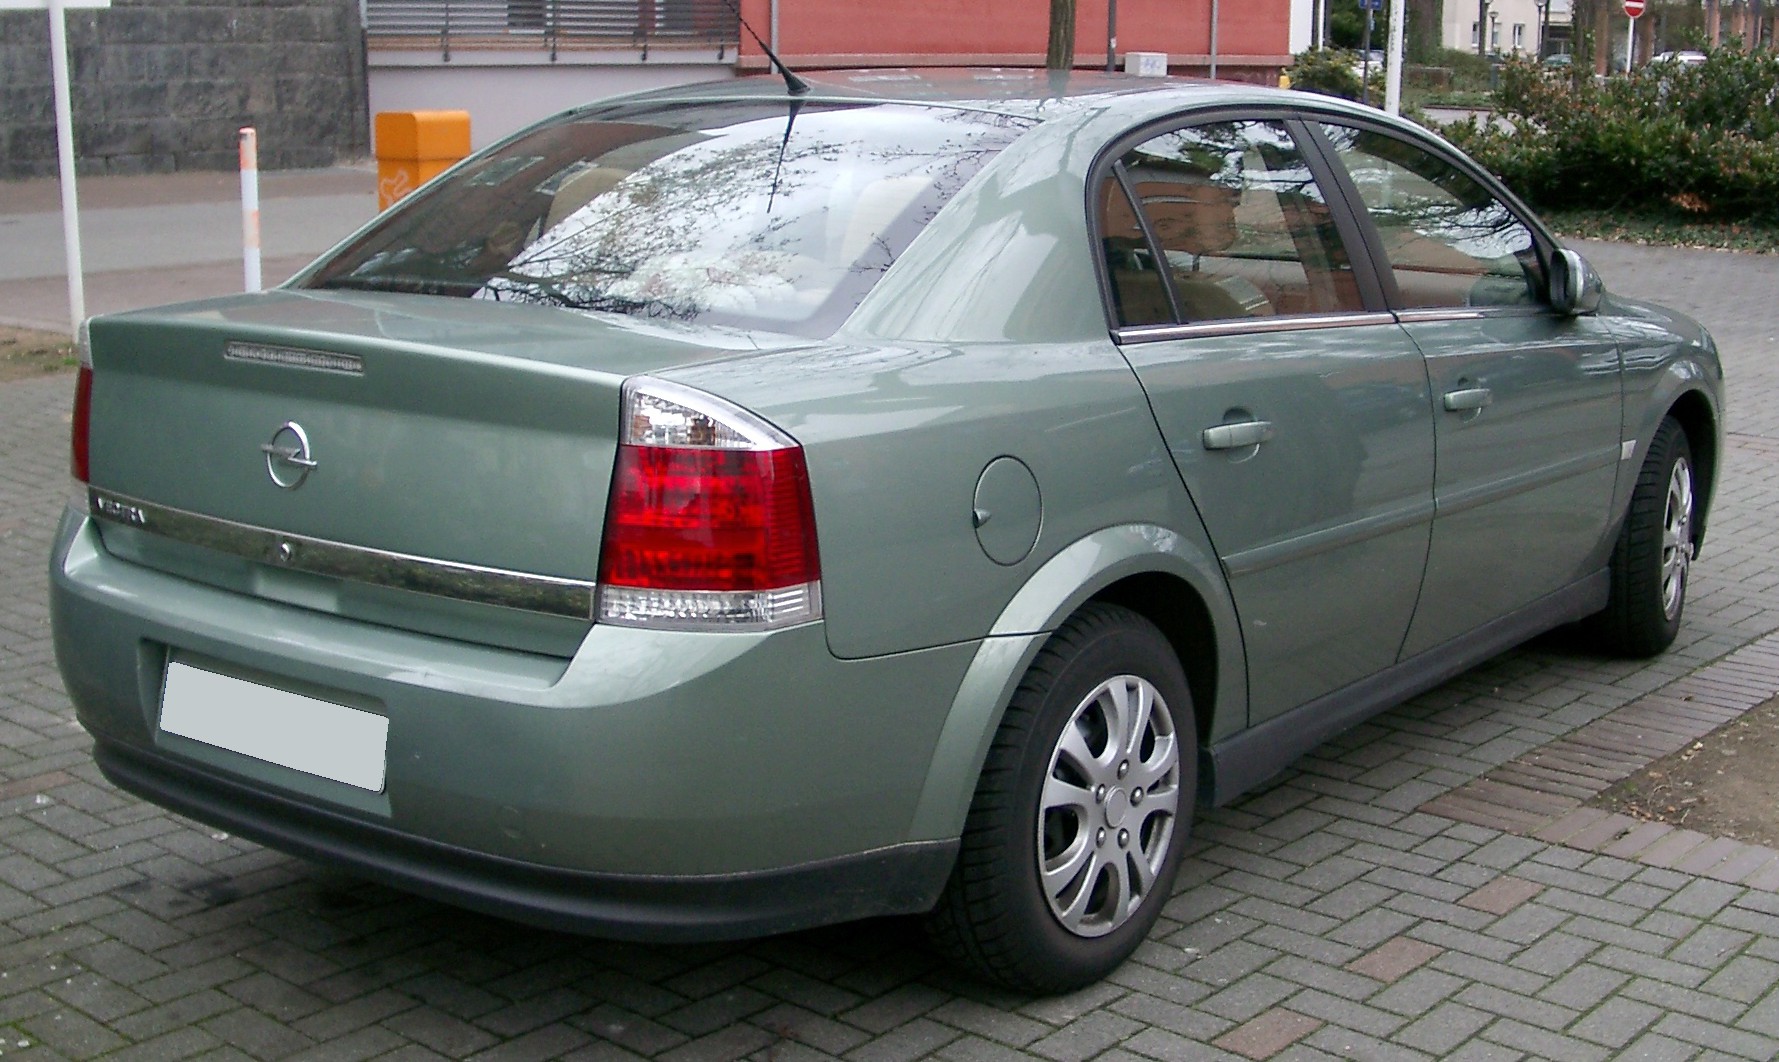 File:Opel Vectra C.jpg - Wikimedia Commons